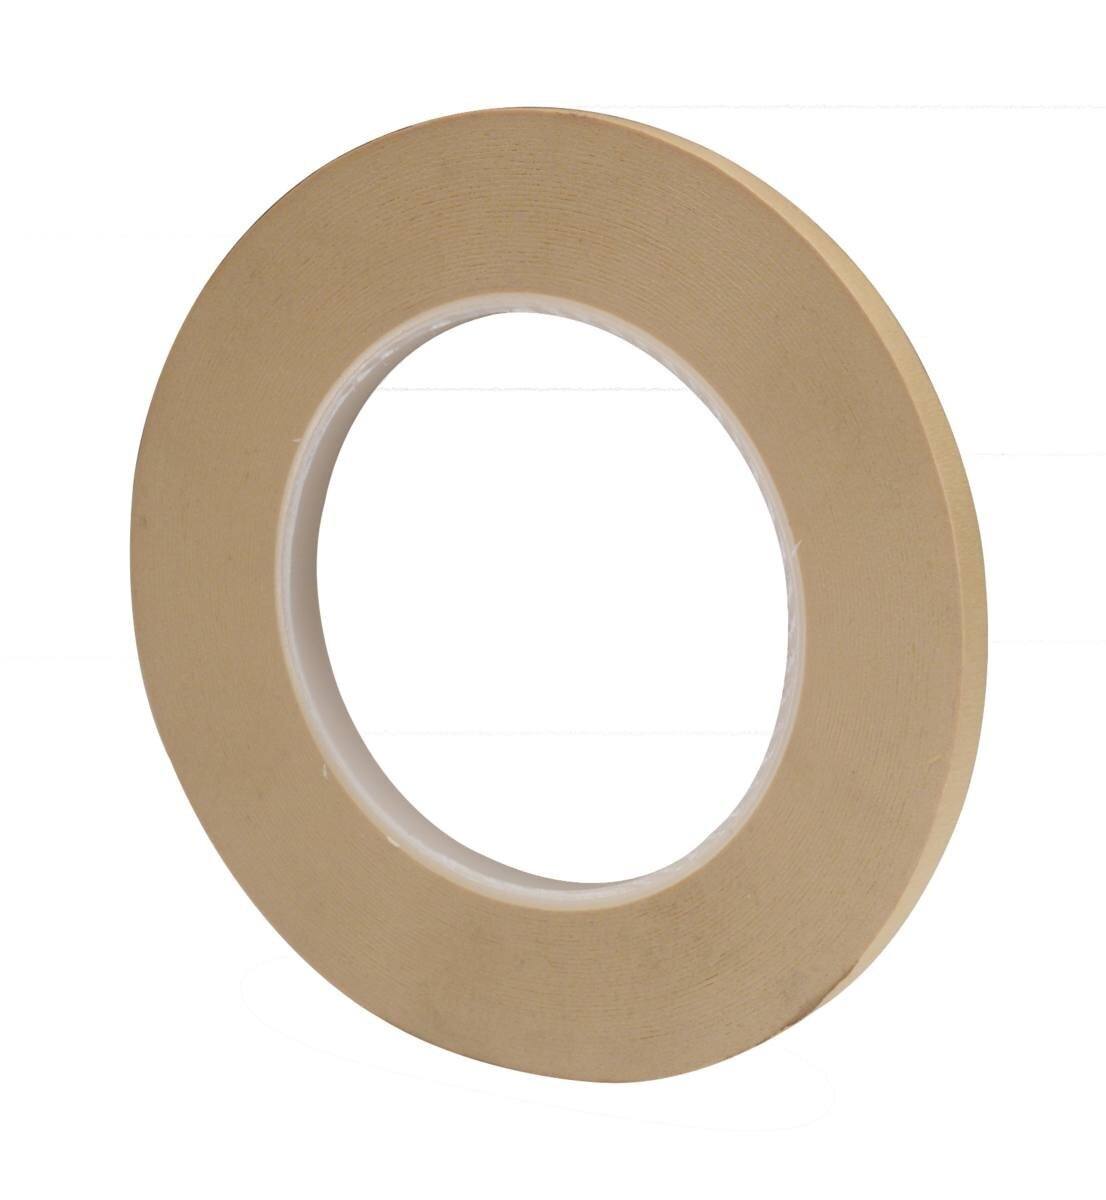 3M Scotch high performance masking tape 233, beige, 50 m x 18 mm